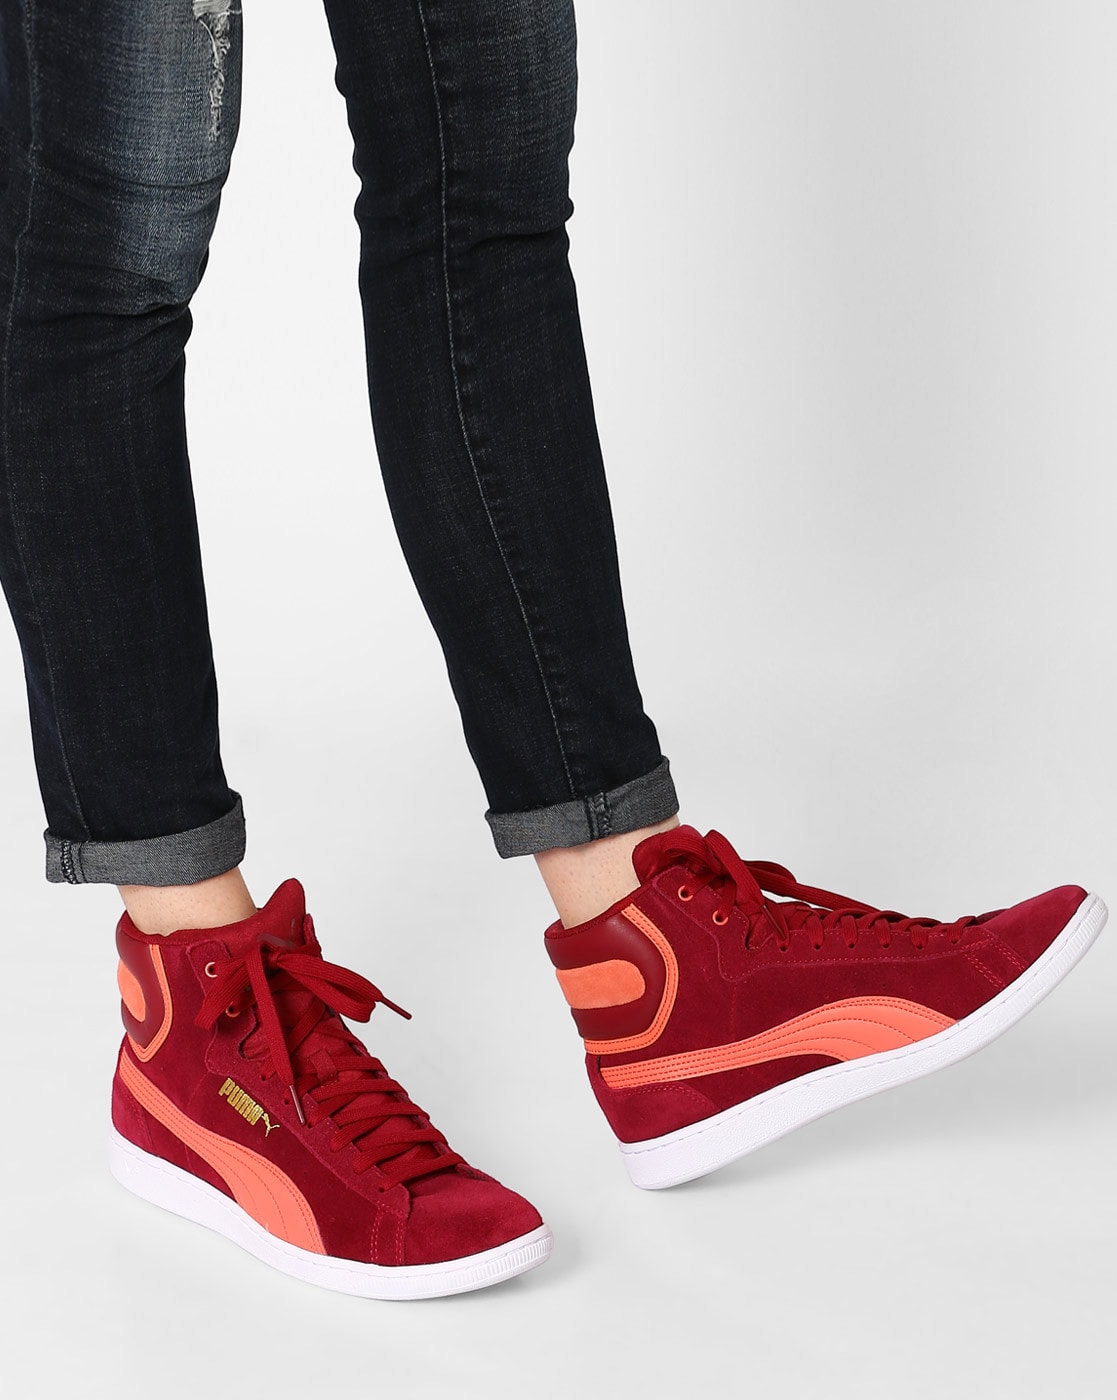 Puma Mid Platform Black Ankle Strap Leather Sneakers Women's Size 6 | eBay